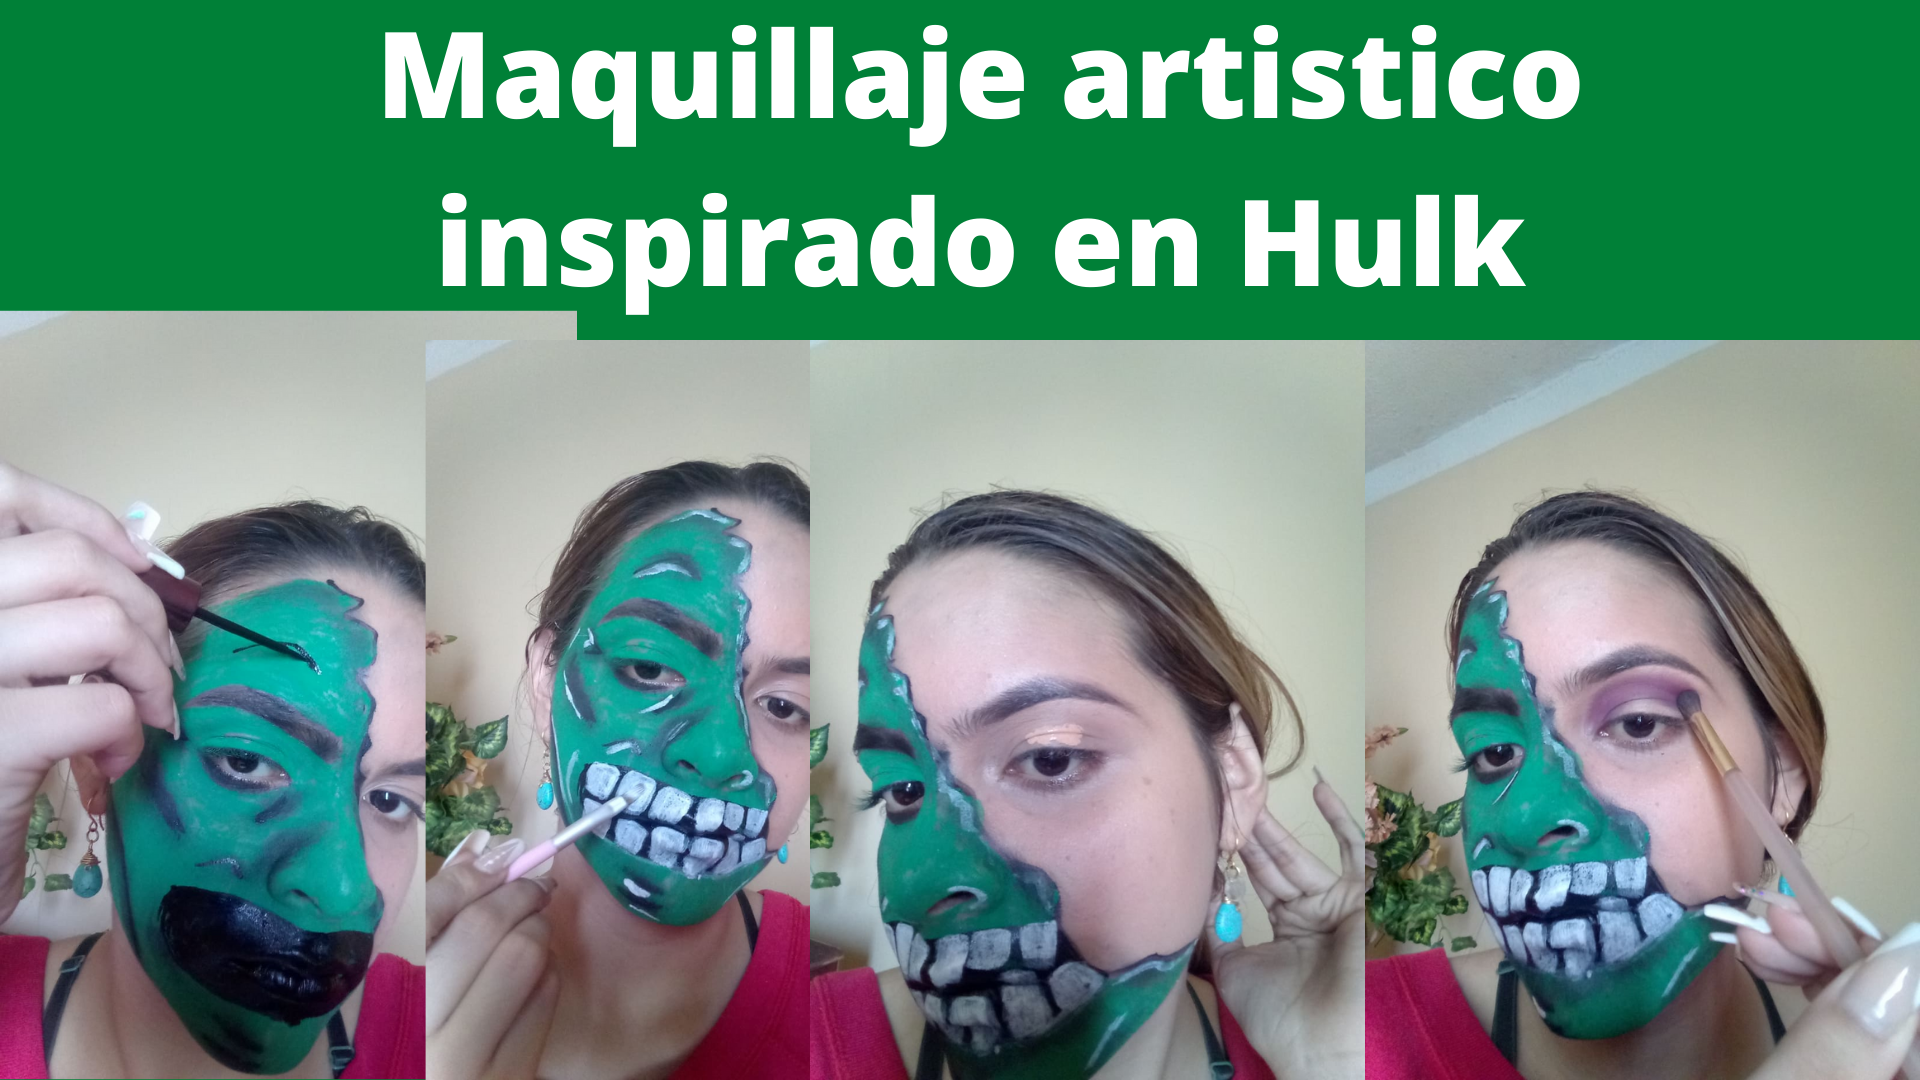 Maquillaje artistico inspirado en Hulk (2).png